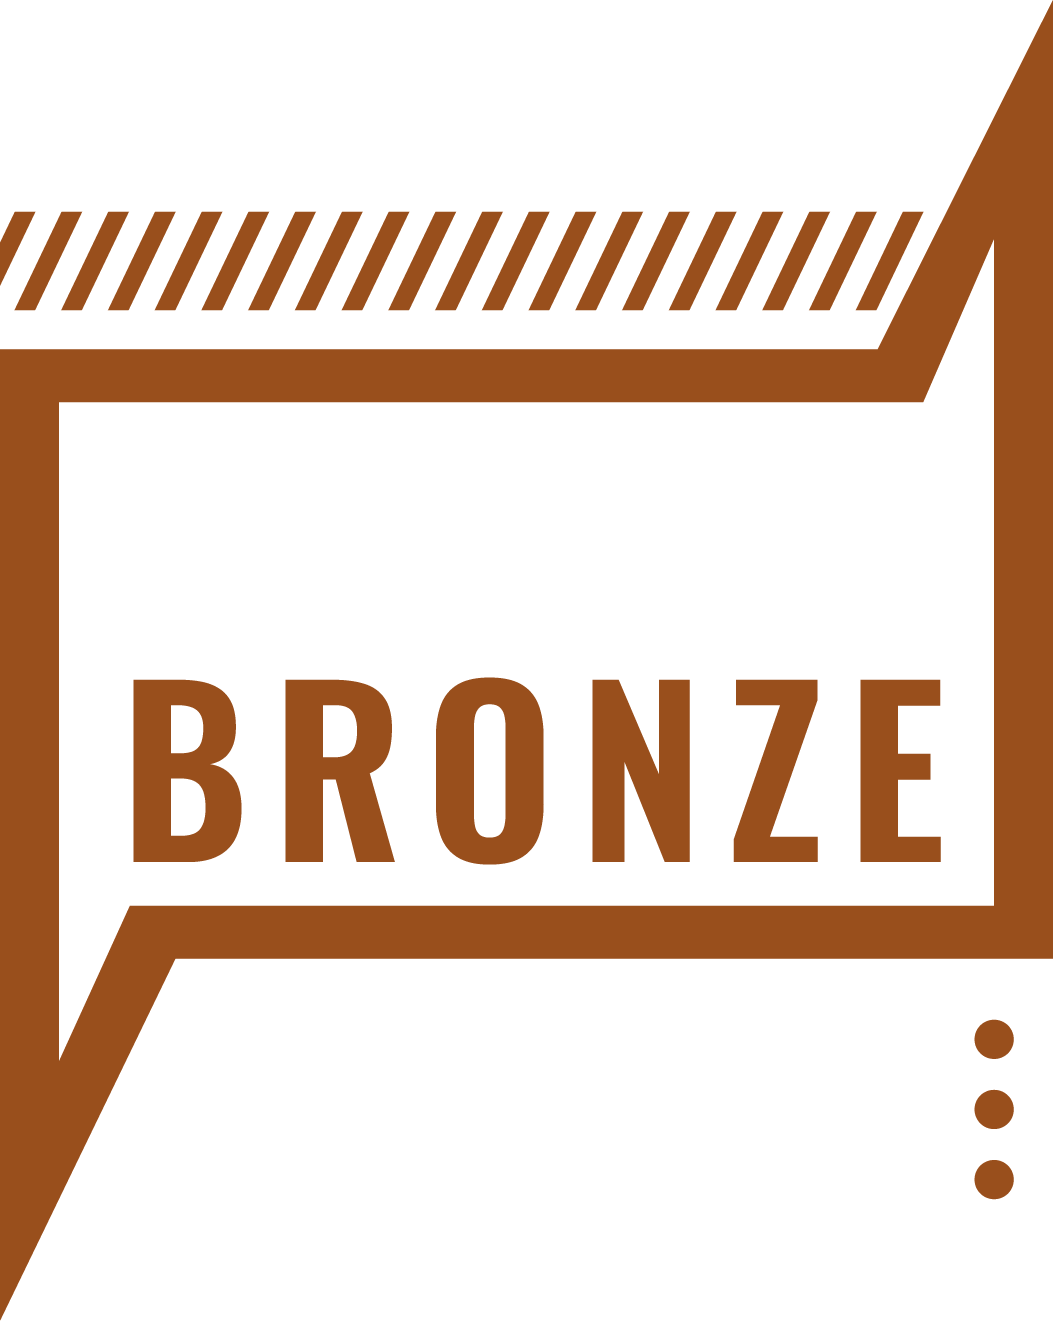 Pack Bronze